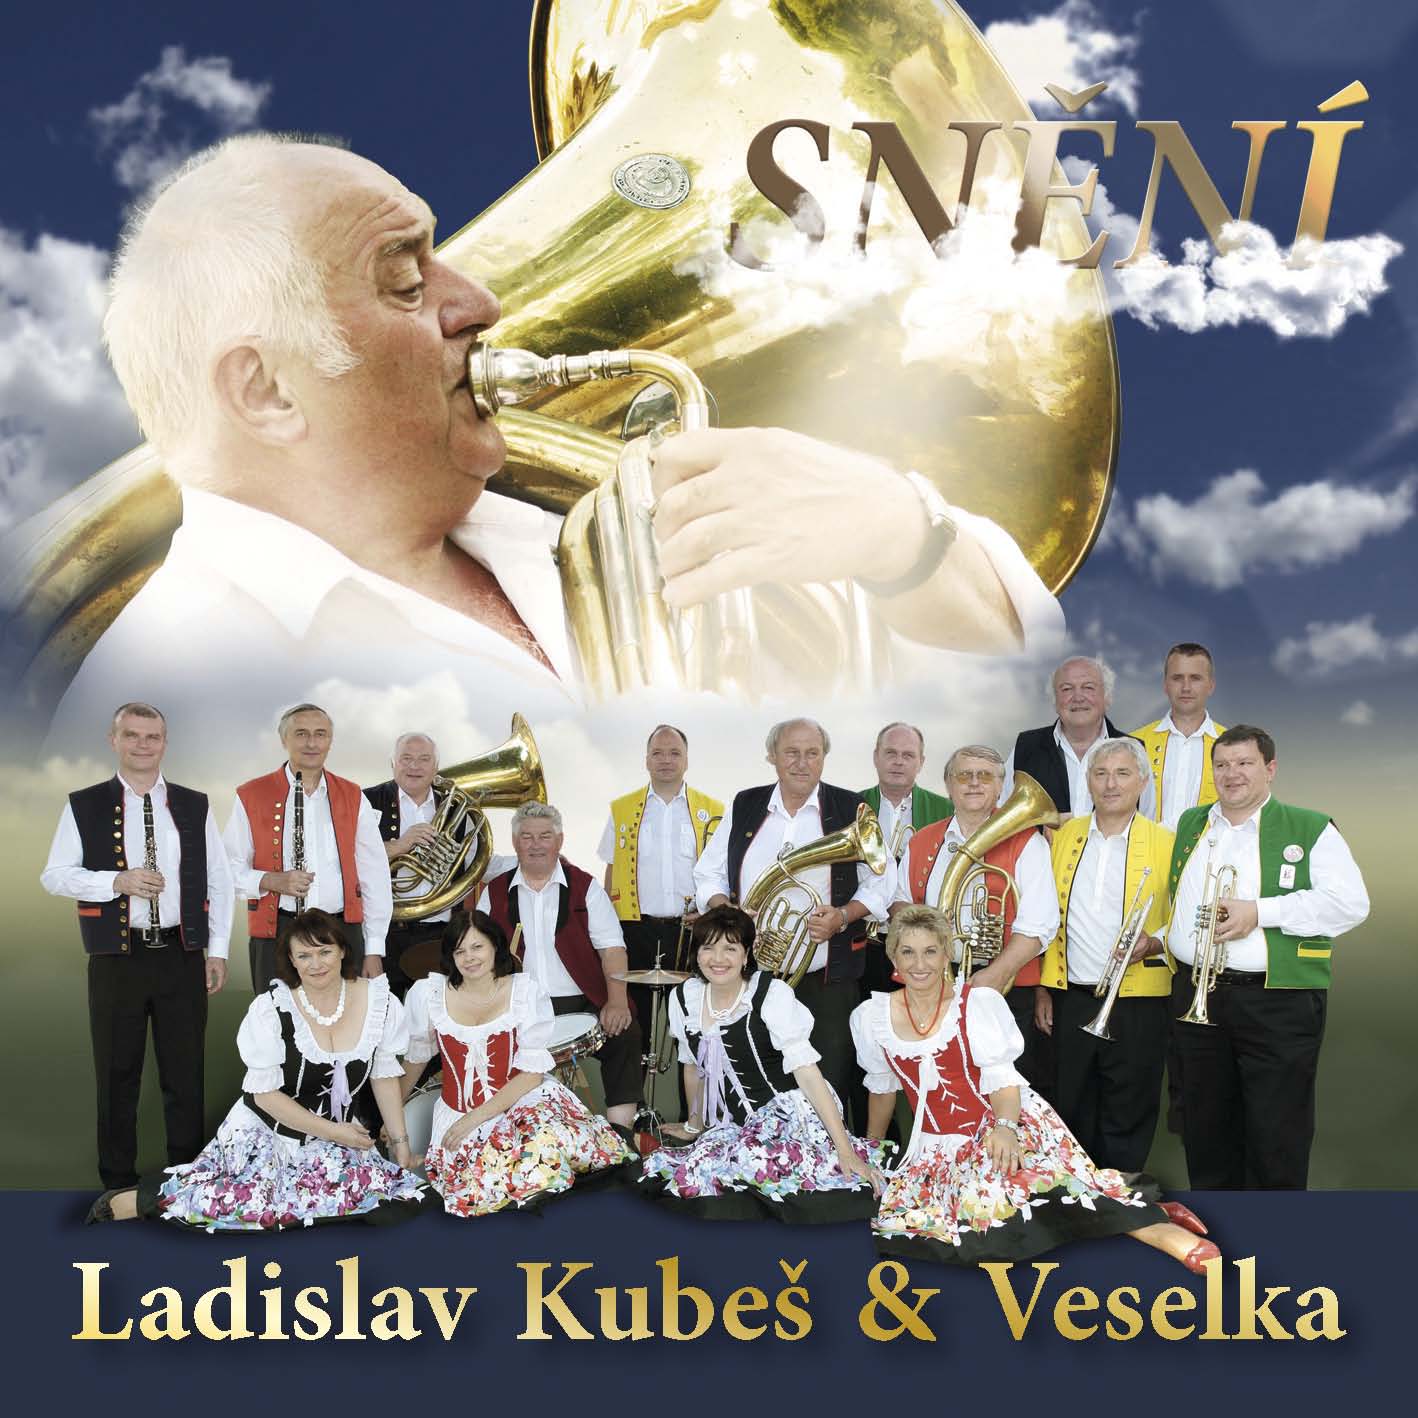 Veselka-CD_ansicht_blau-gold_Stránka_1